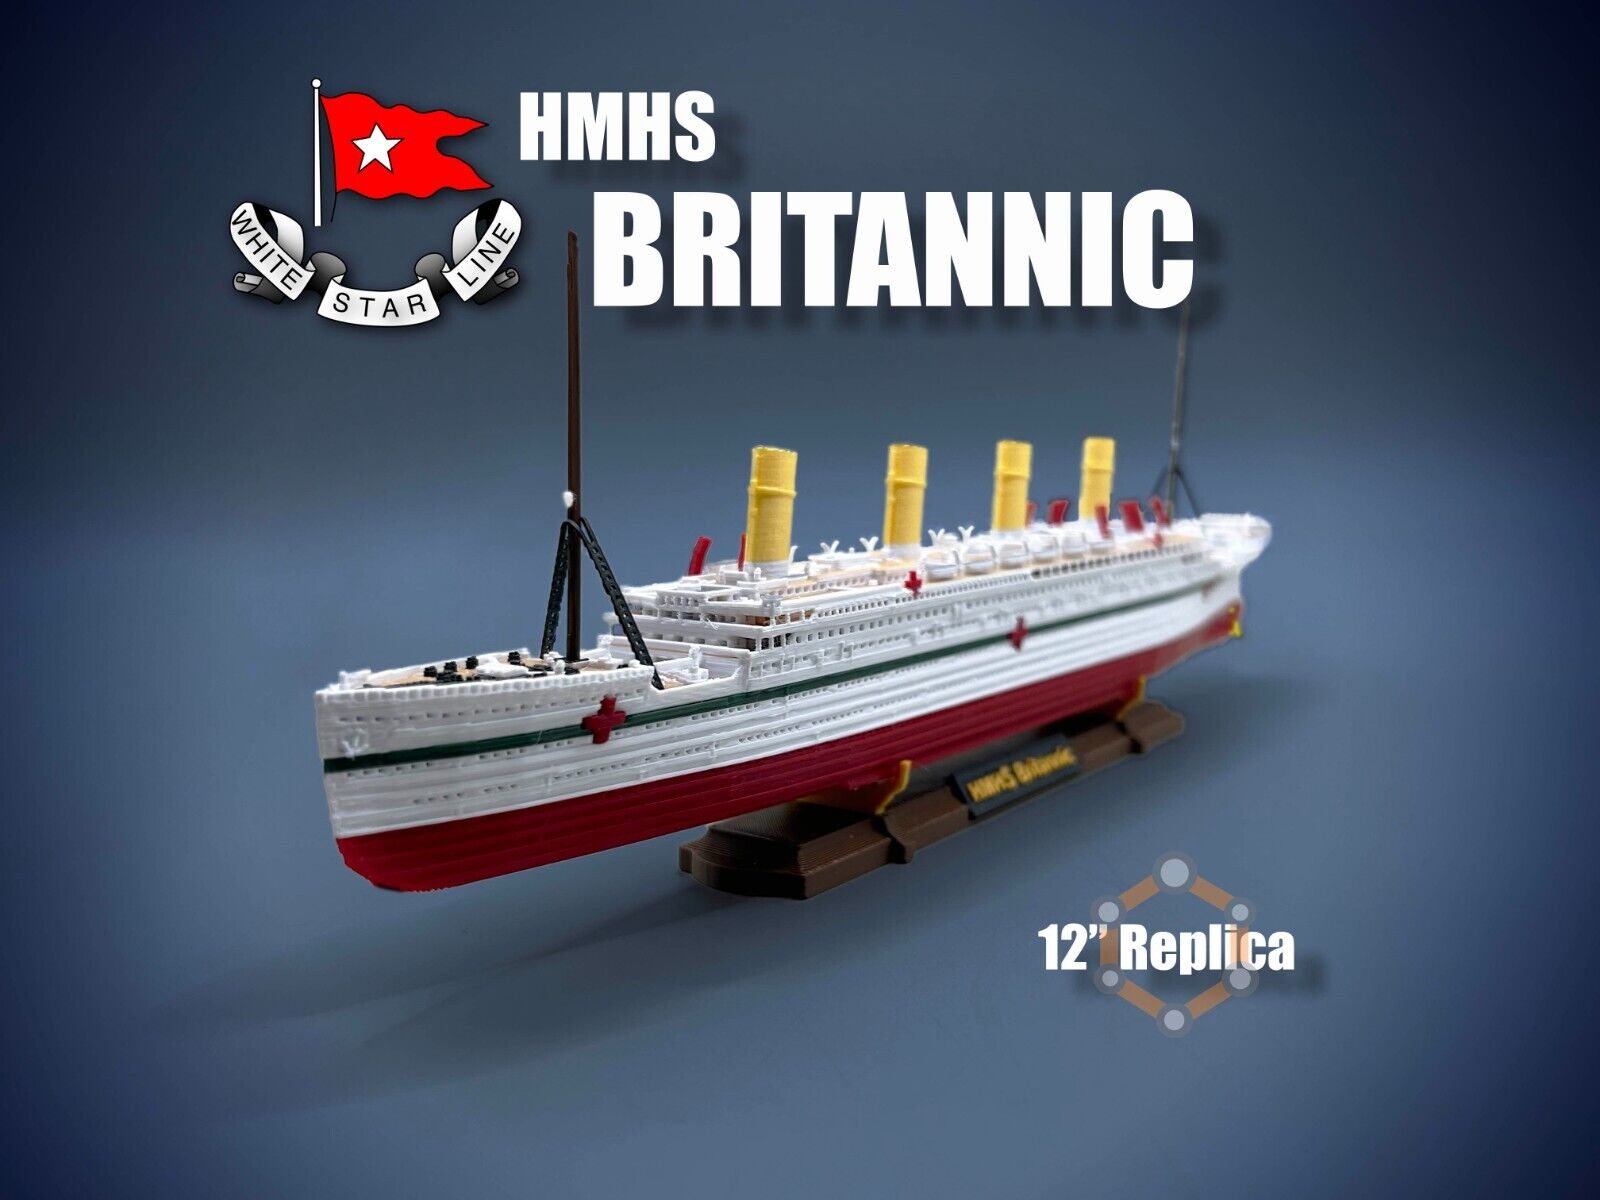 12” HMHS Britannic Replica Very Detailed, High Quality Model Ship